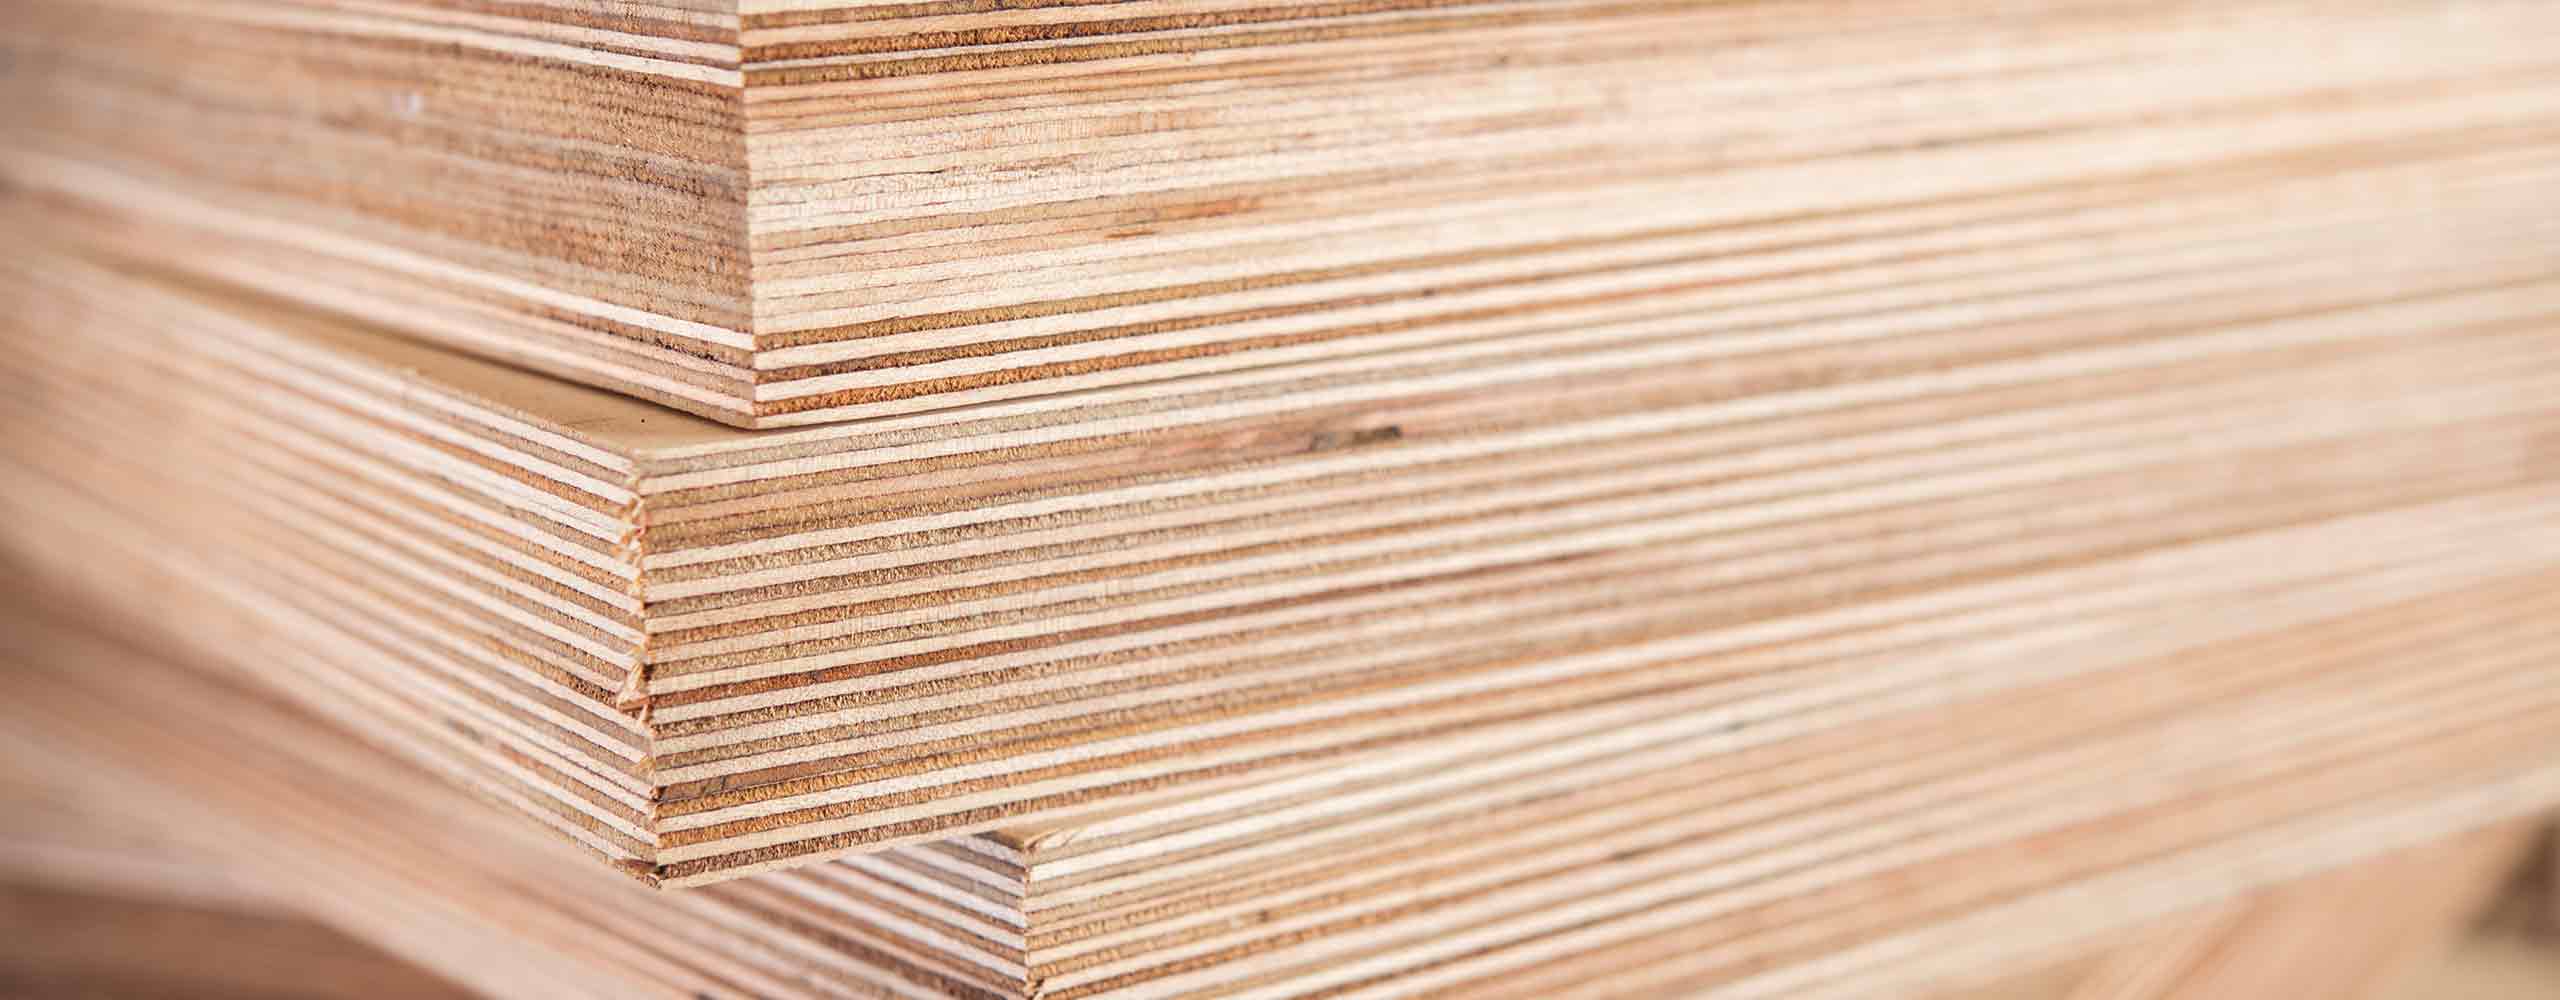 Wood & Wood Based Materials